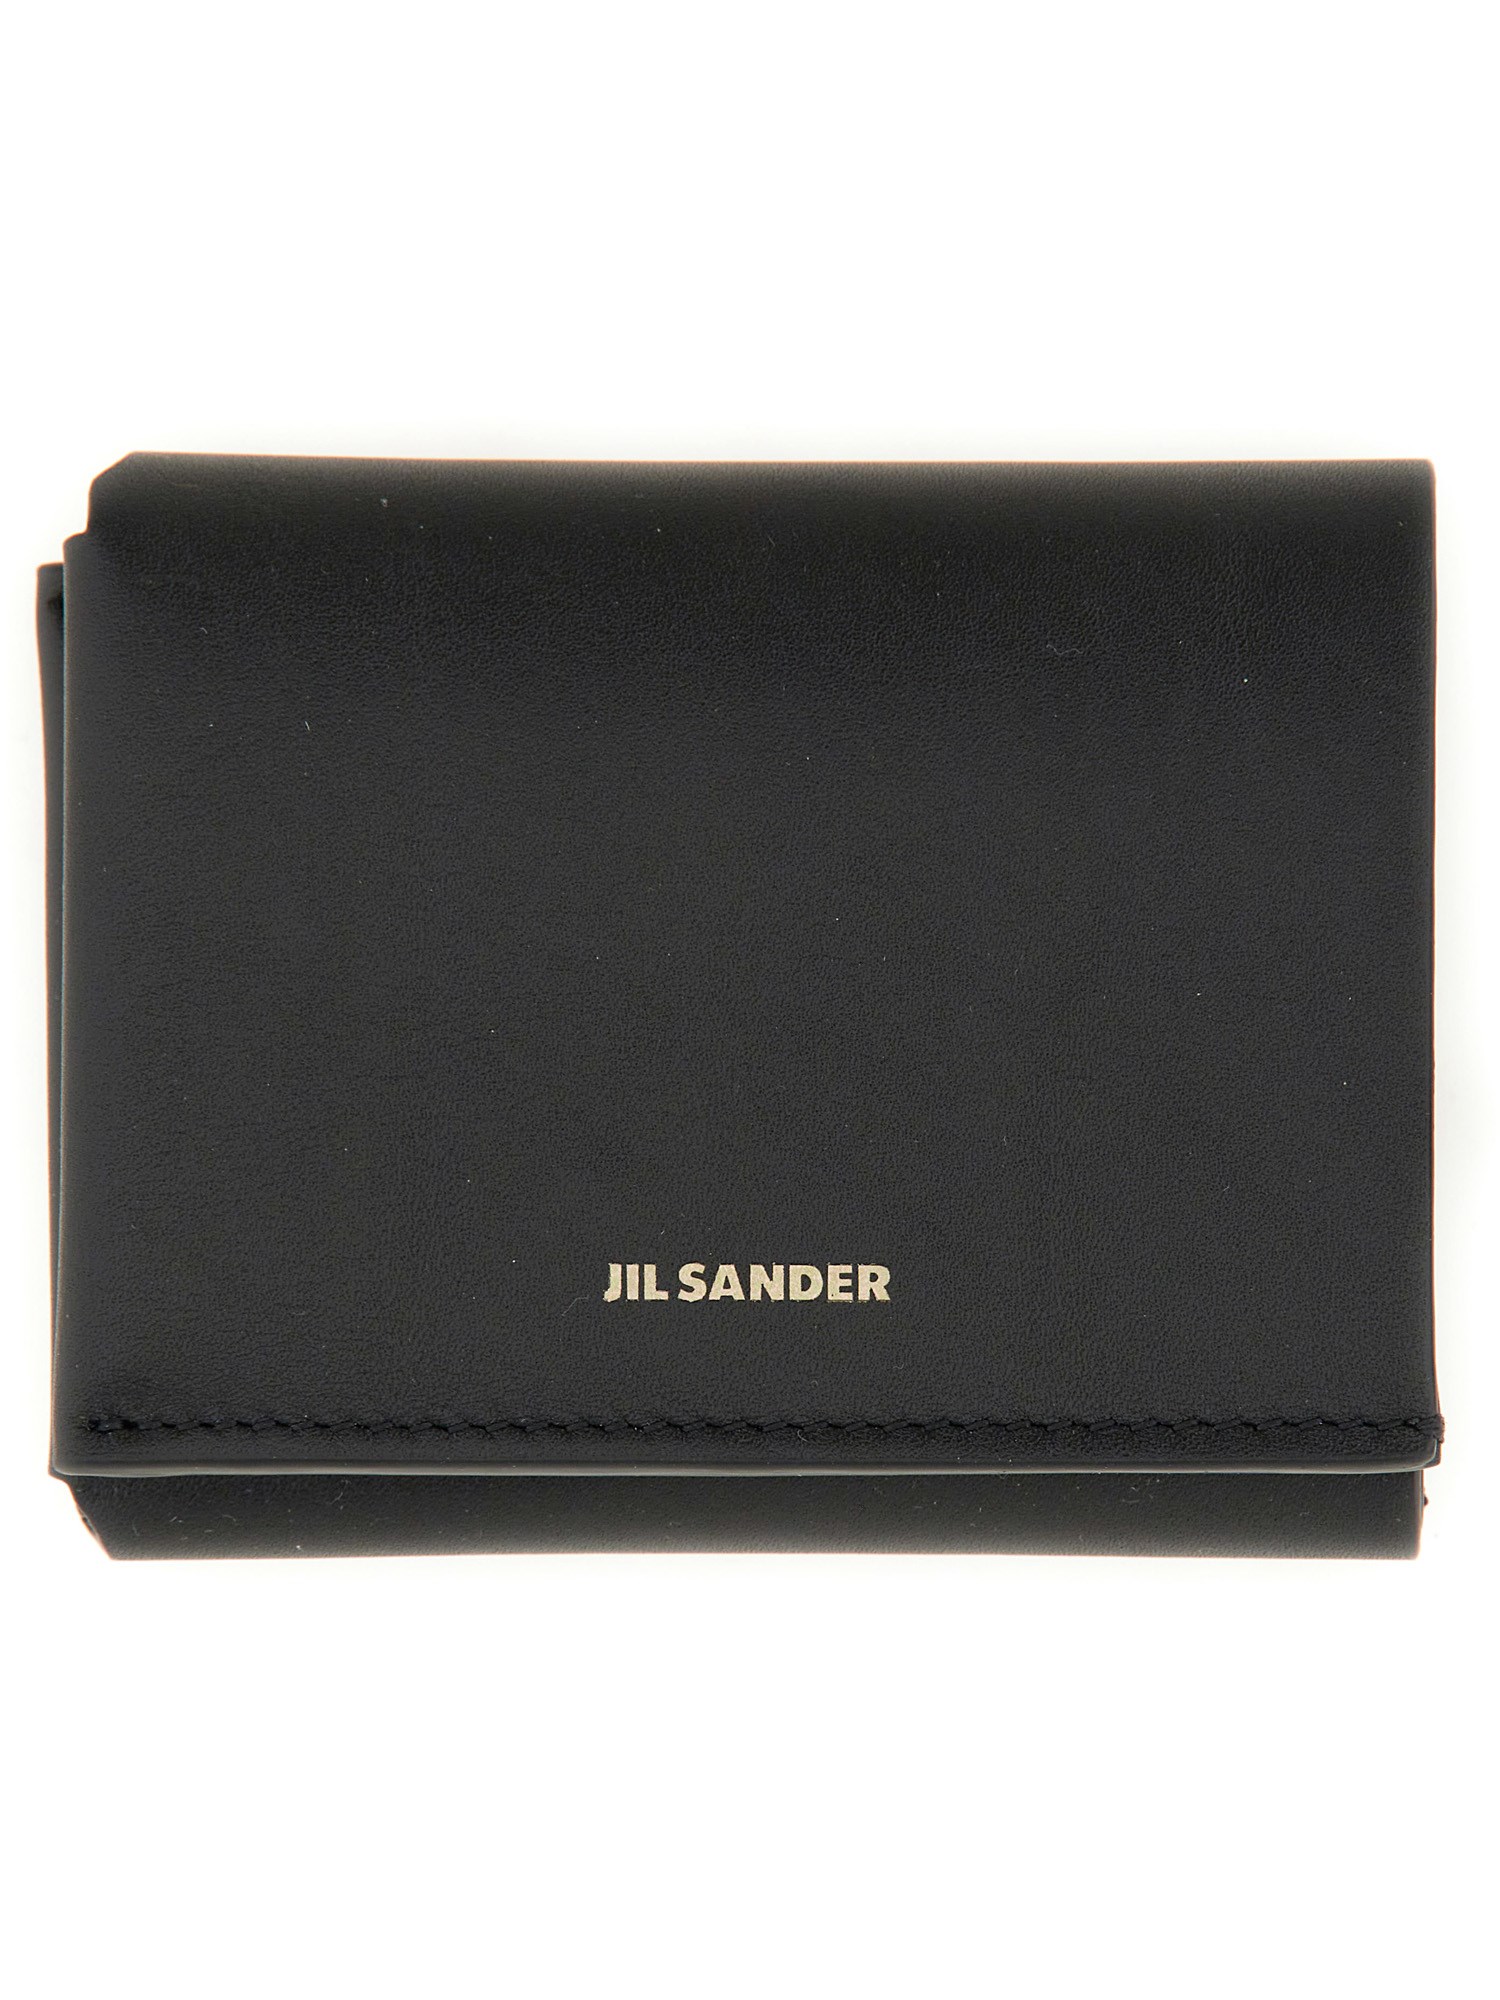 Jil Sander jil sander folding card and coin purse